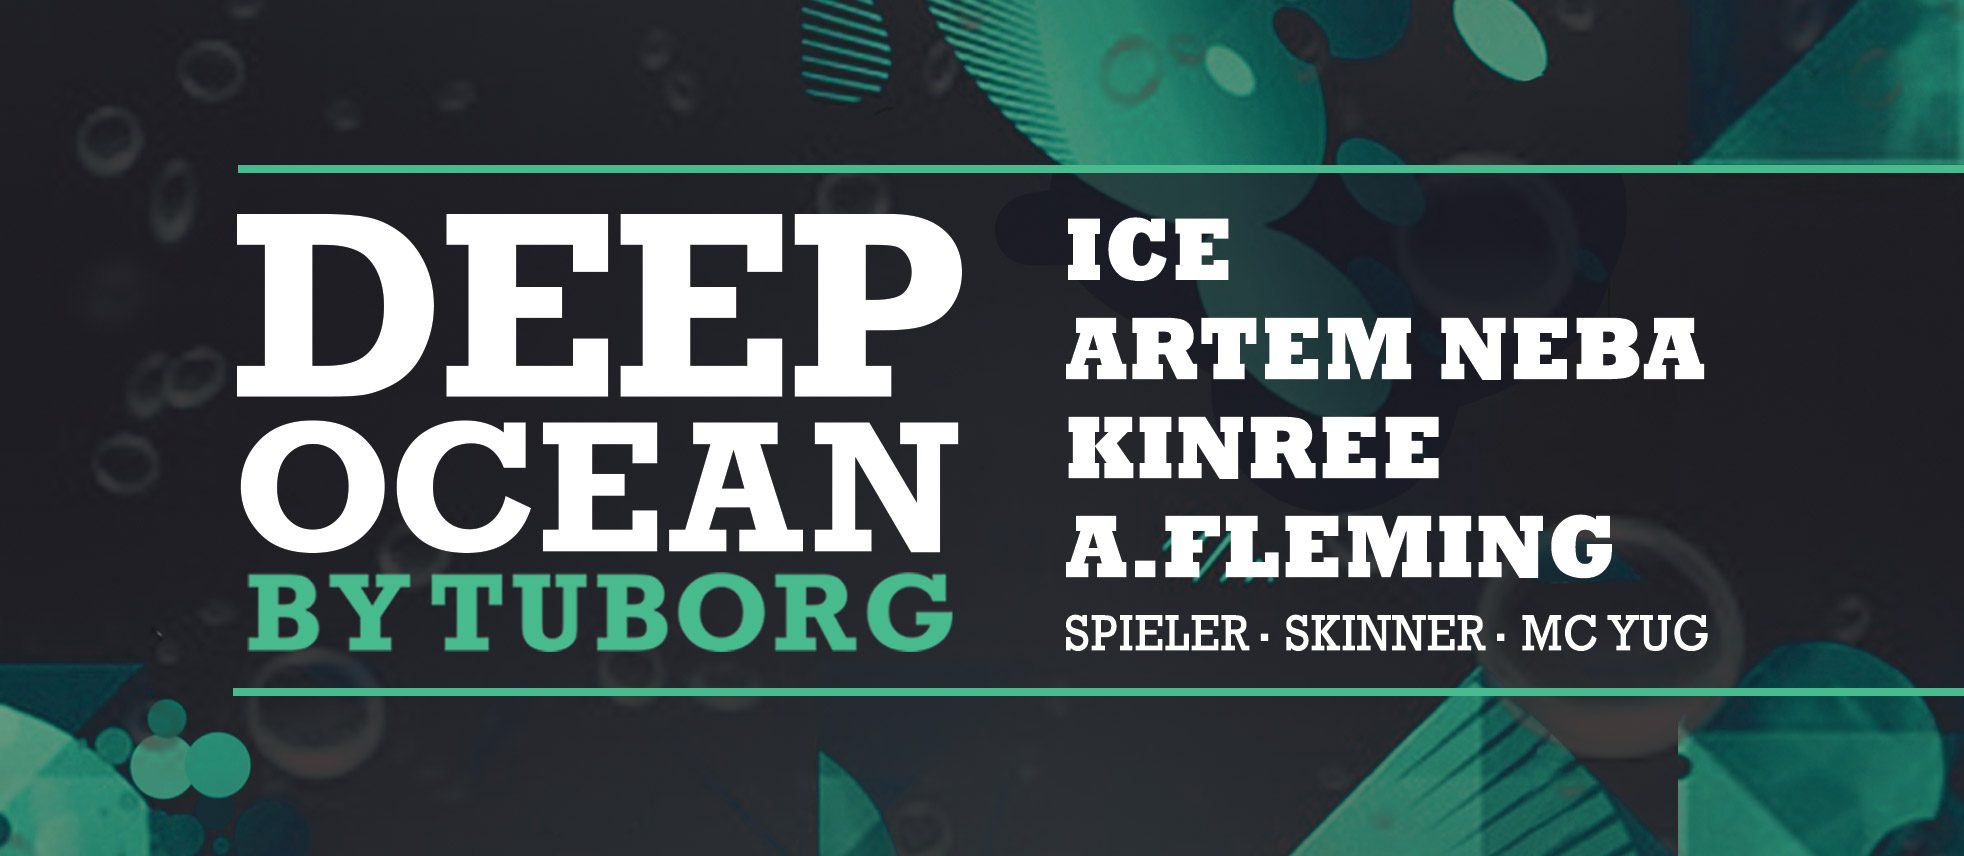 Deep Ocean by Tuborg. Dj Ice, Artem Neba, Kinree, A.Fleming